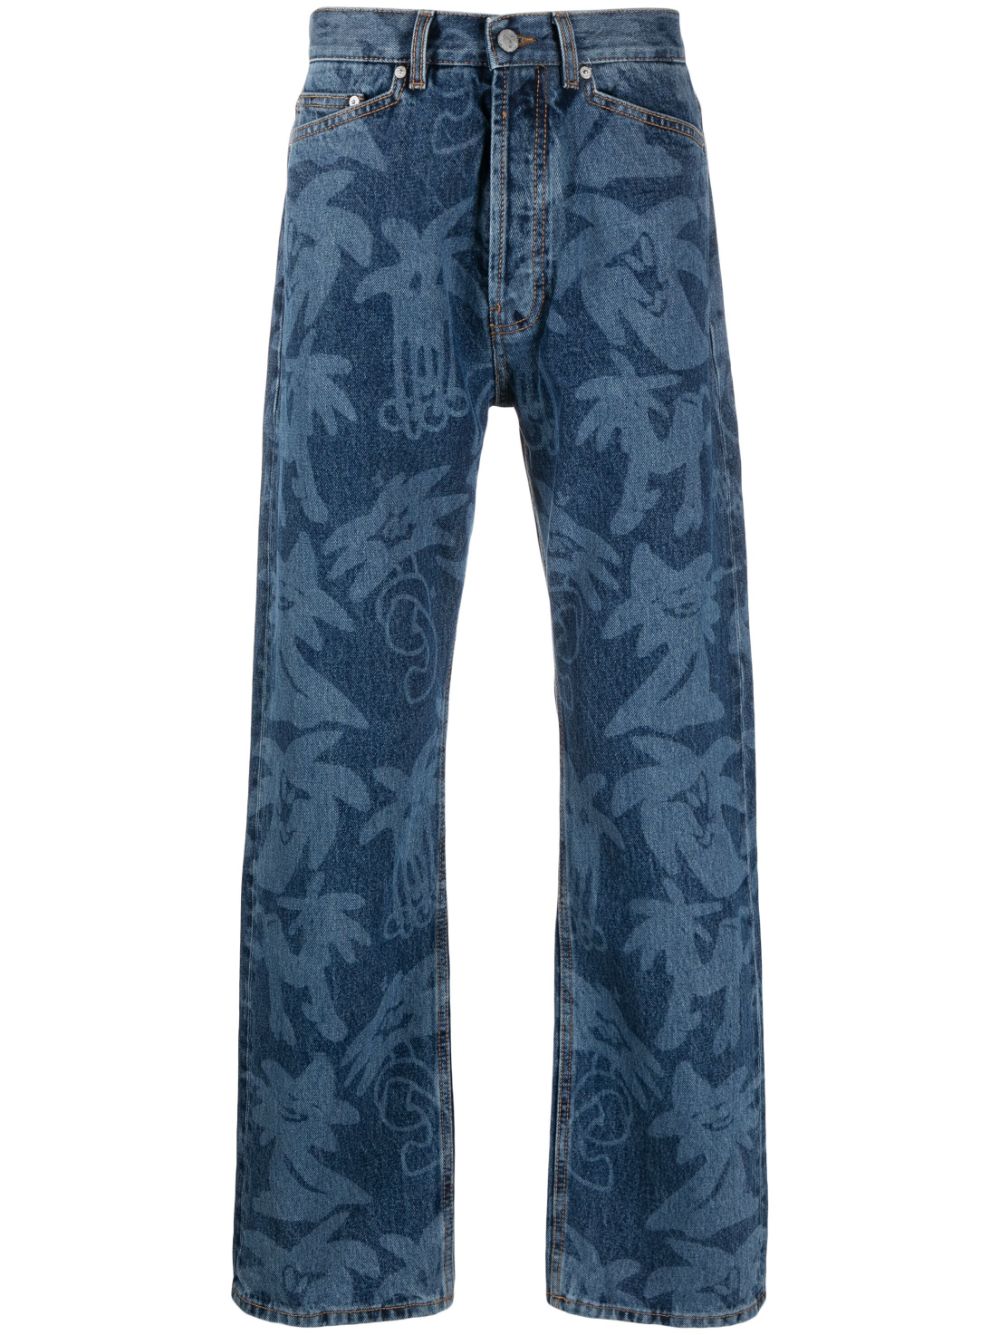 Palm Angels Palmity palm tree-print jeans - Blue